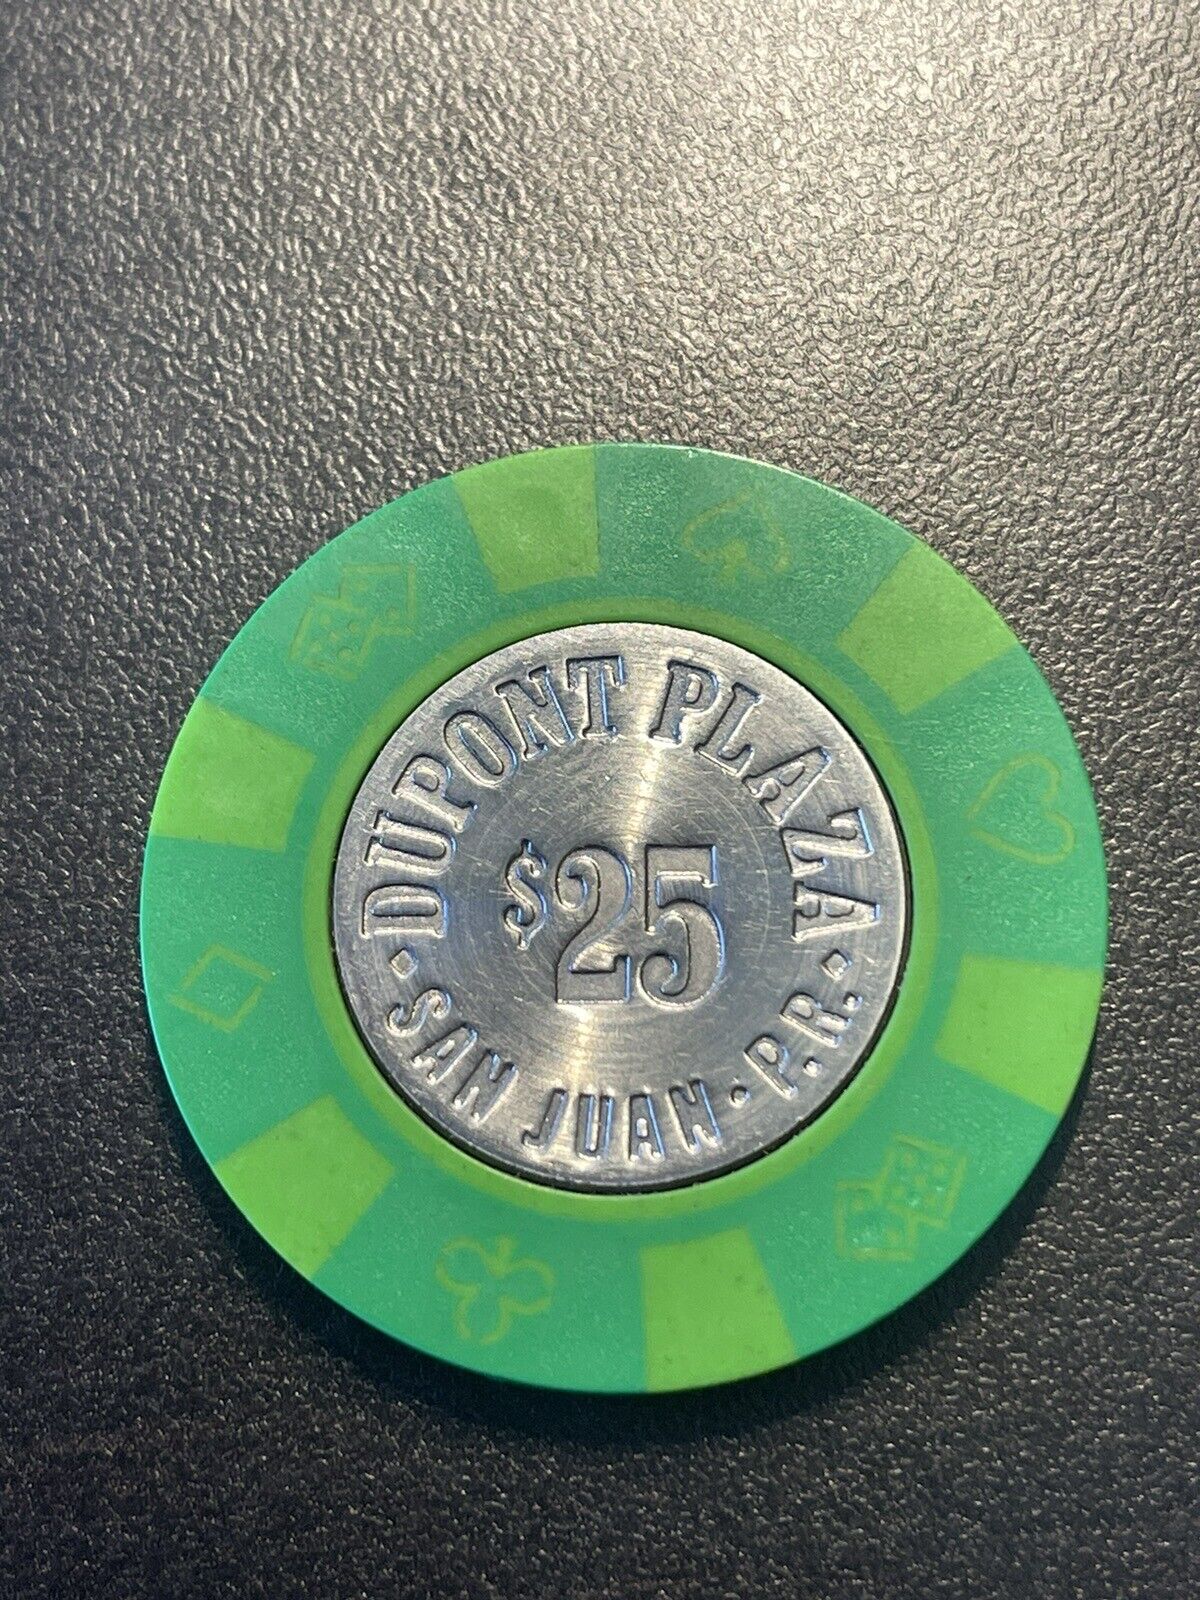 $25 Dupont Plaza San Juan Puerto Rico Casino Chip DPL-25b ***VERY RARE***